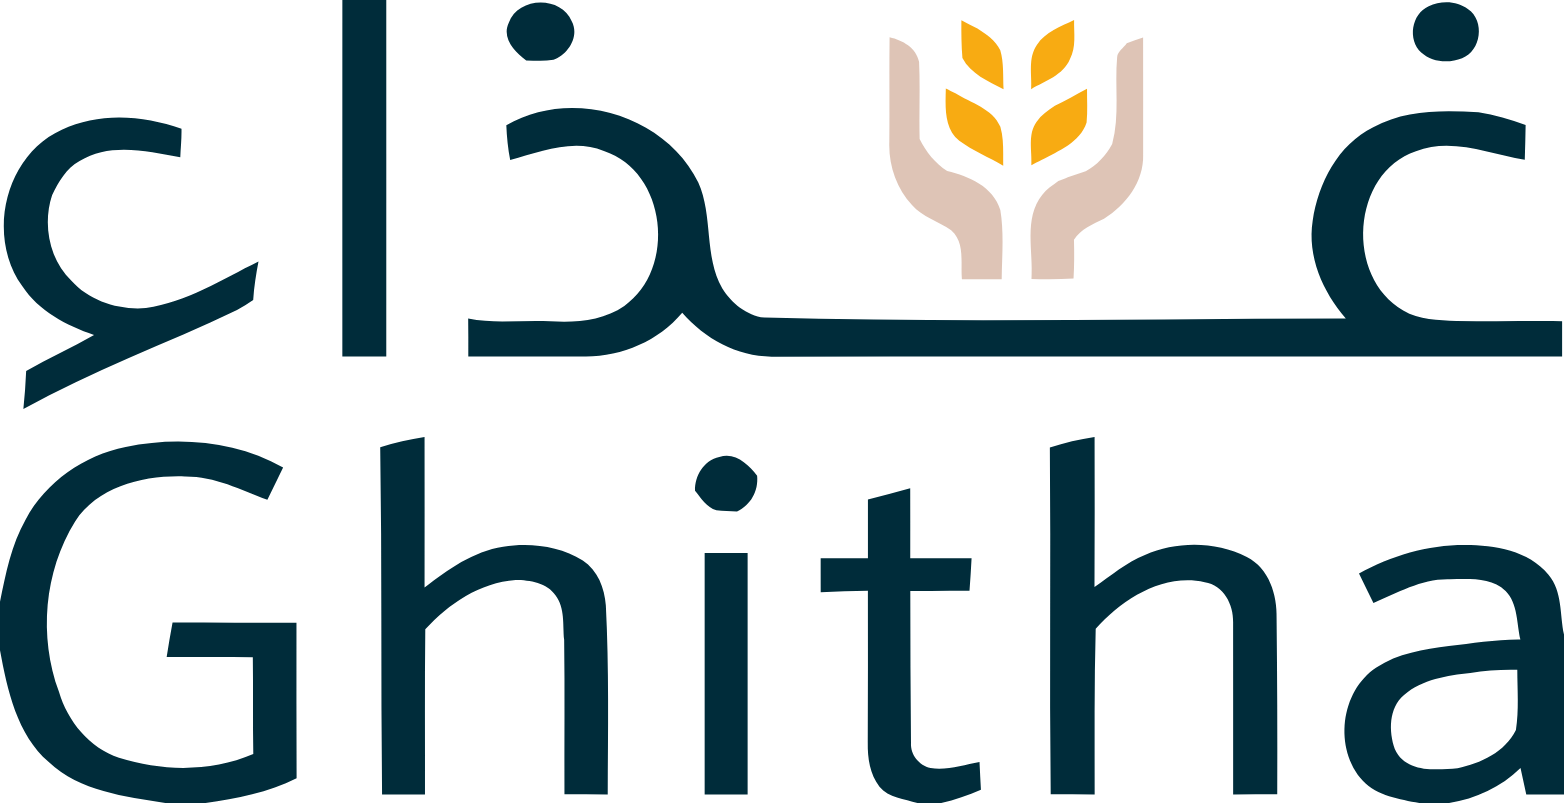 Ghitha logo large (transparent PNG)